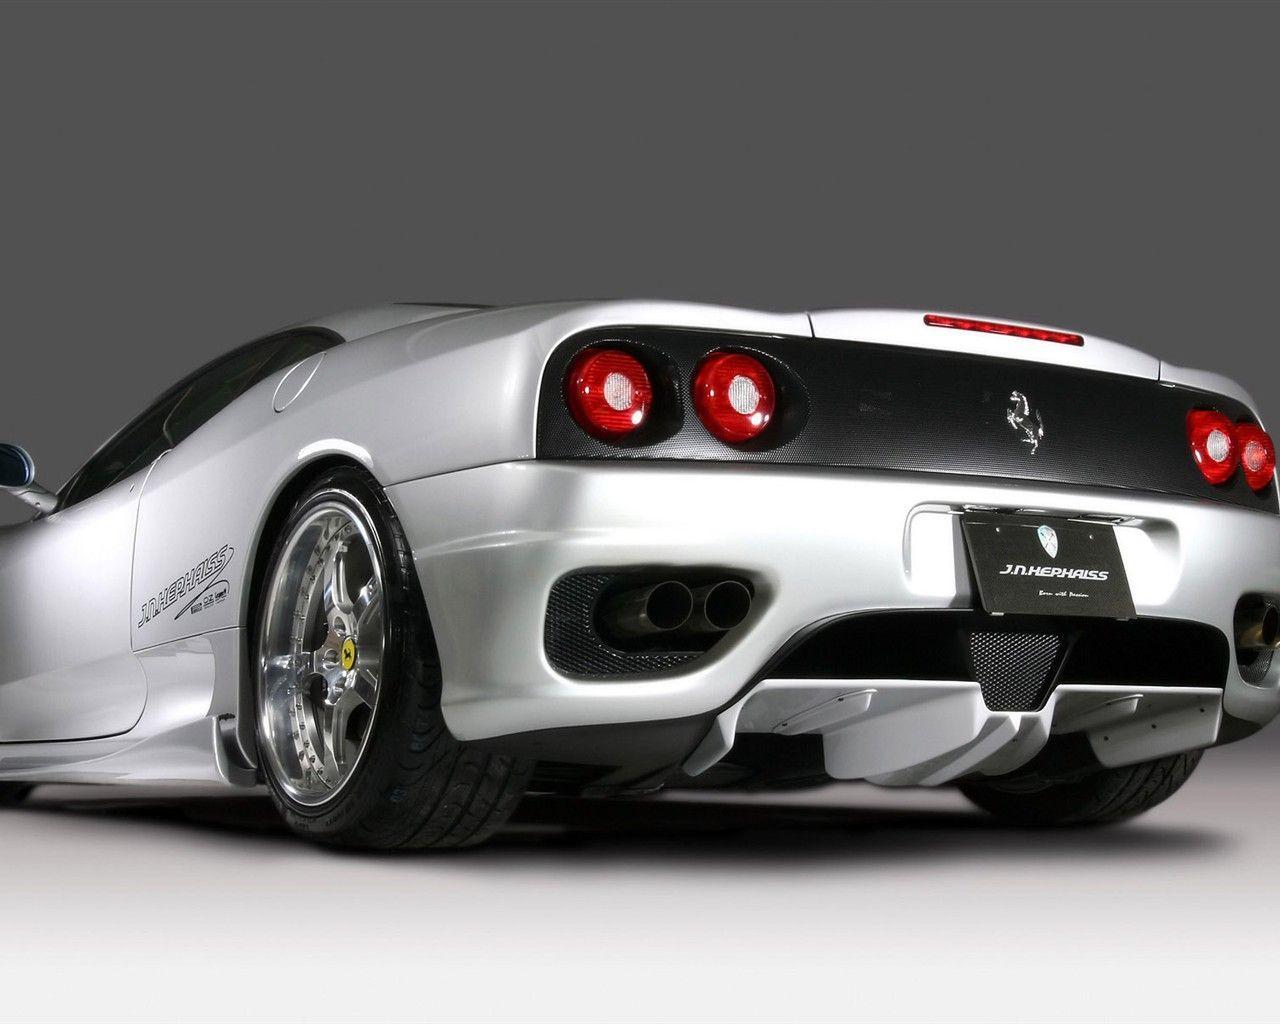 White Ferrari F430 Wallpaper and Background